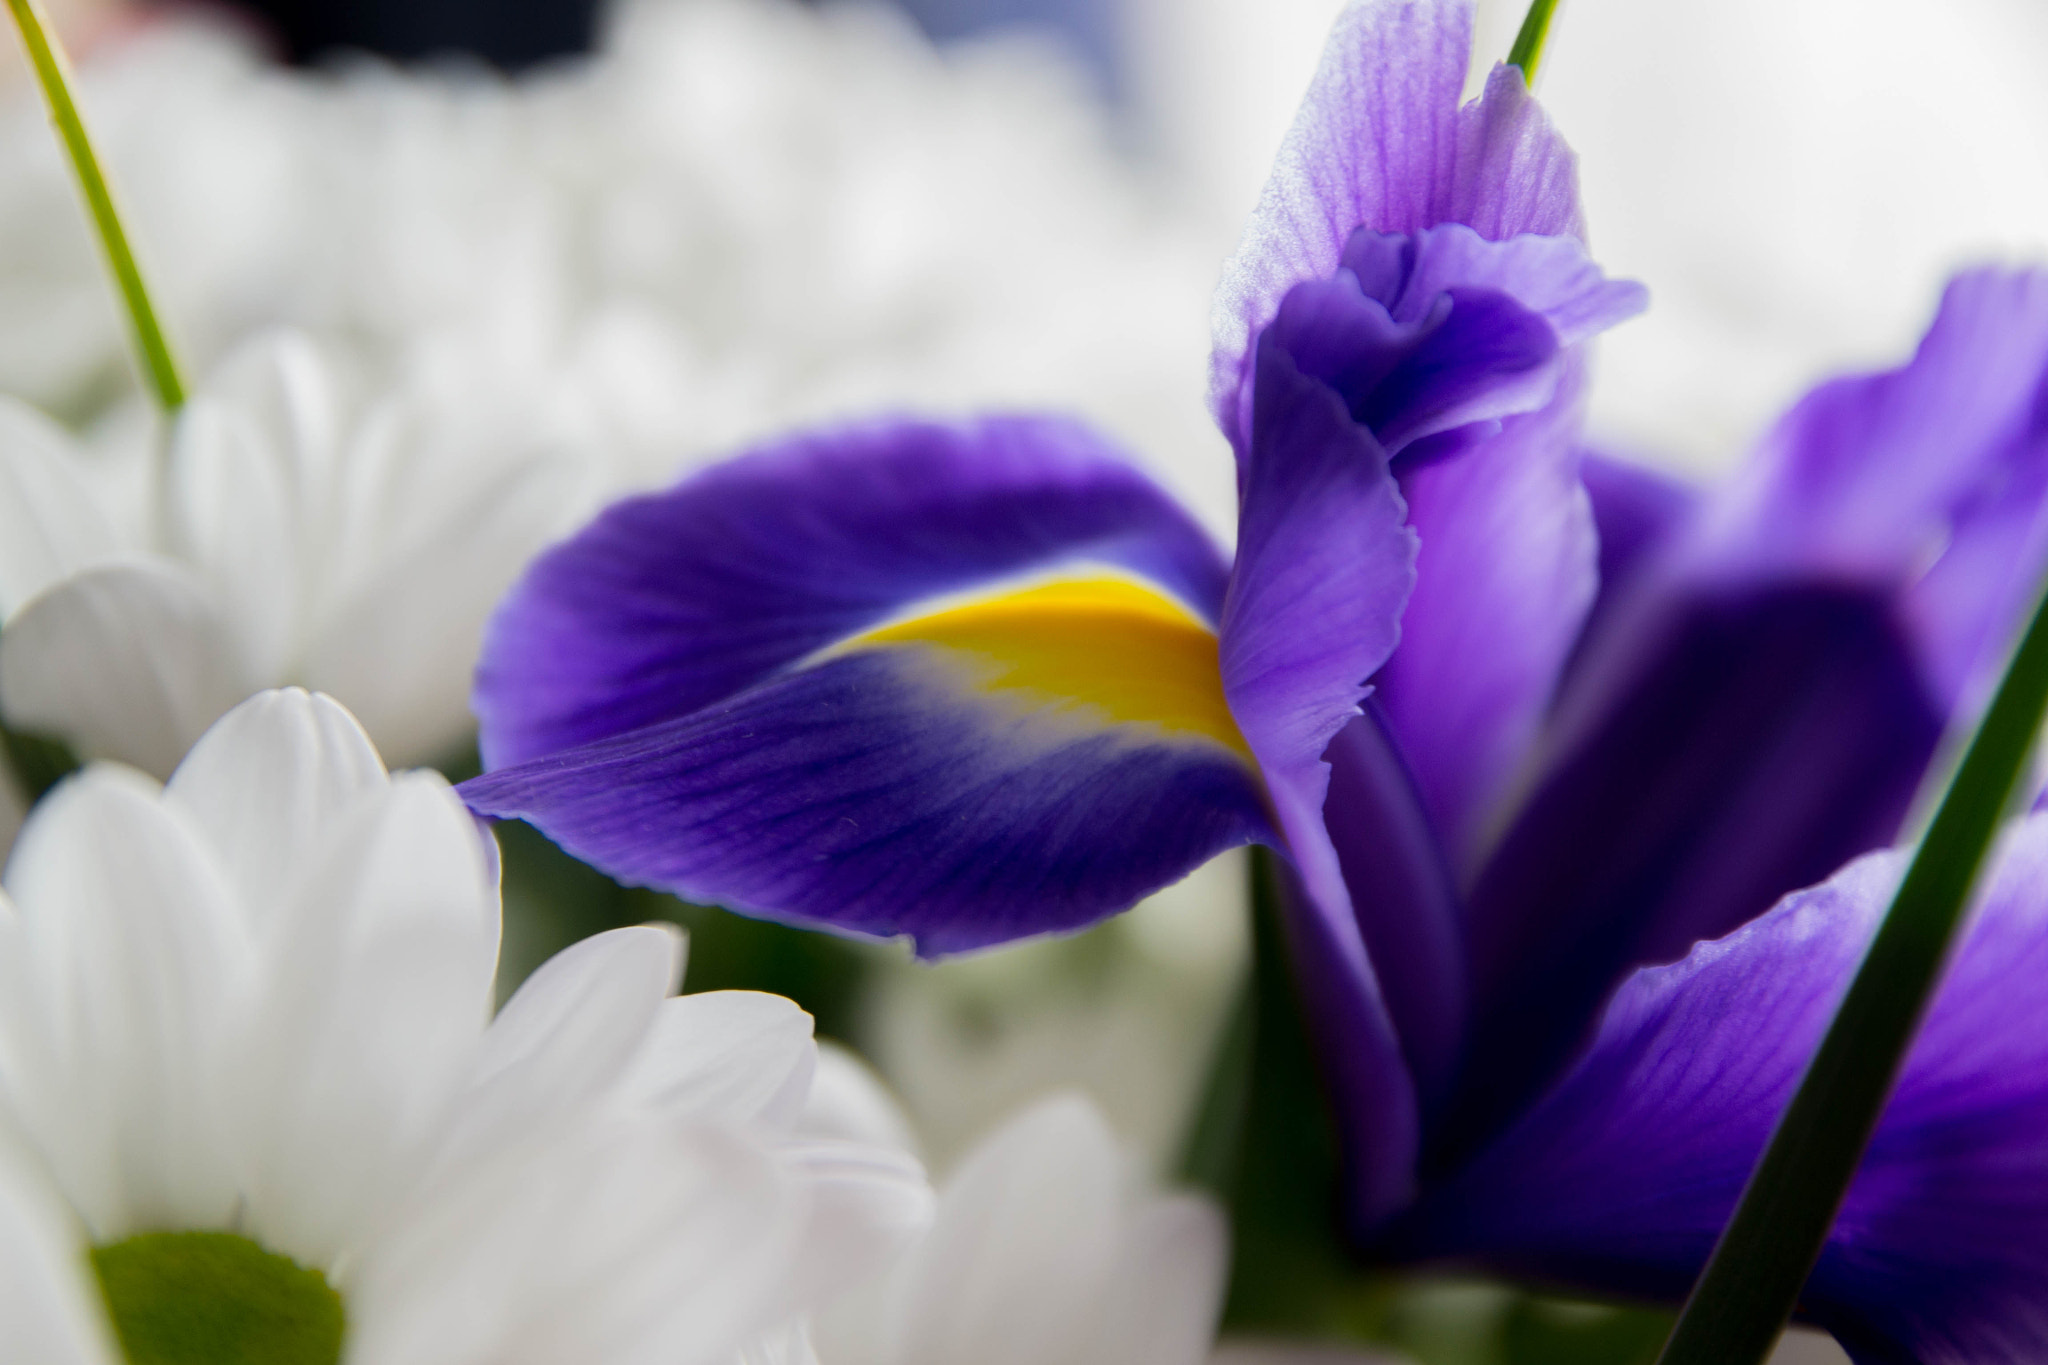 Purple iris flower with white background.